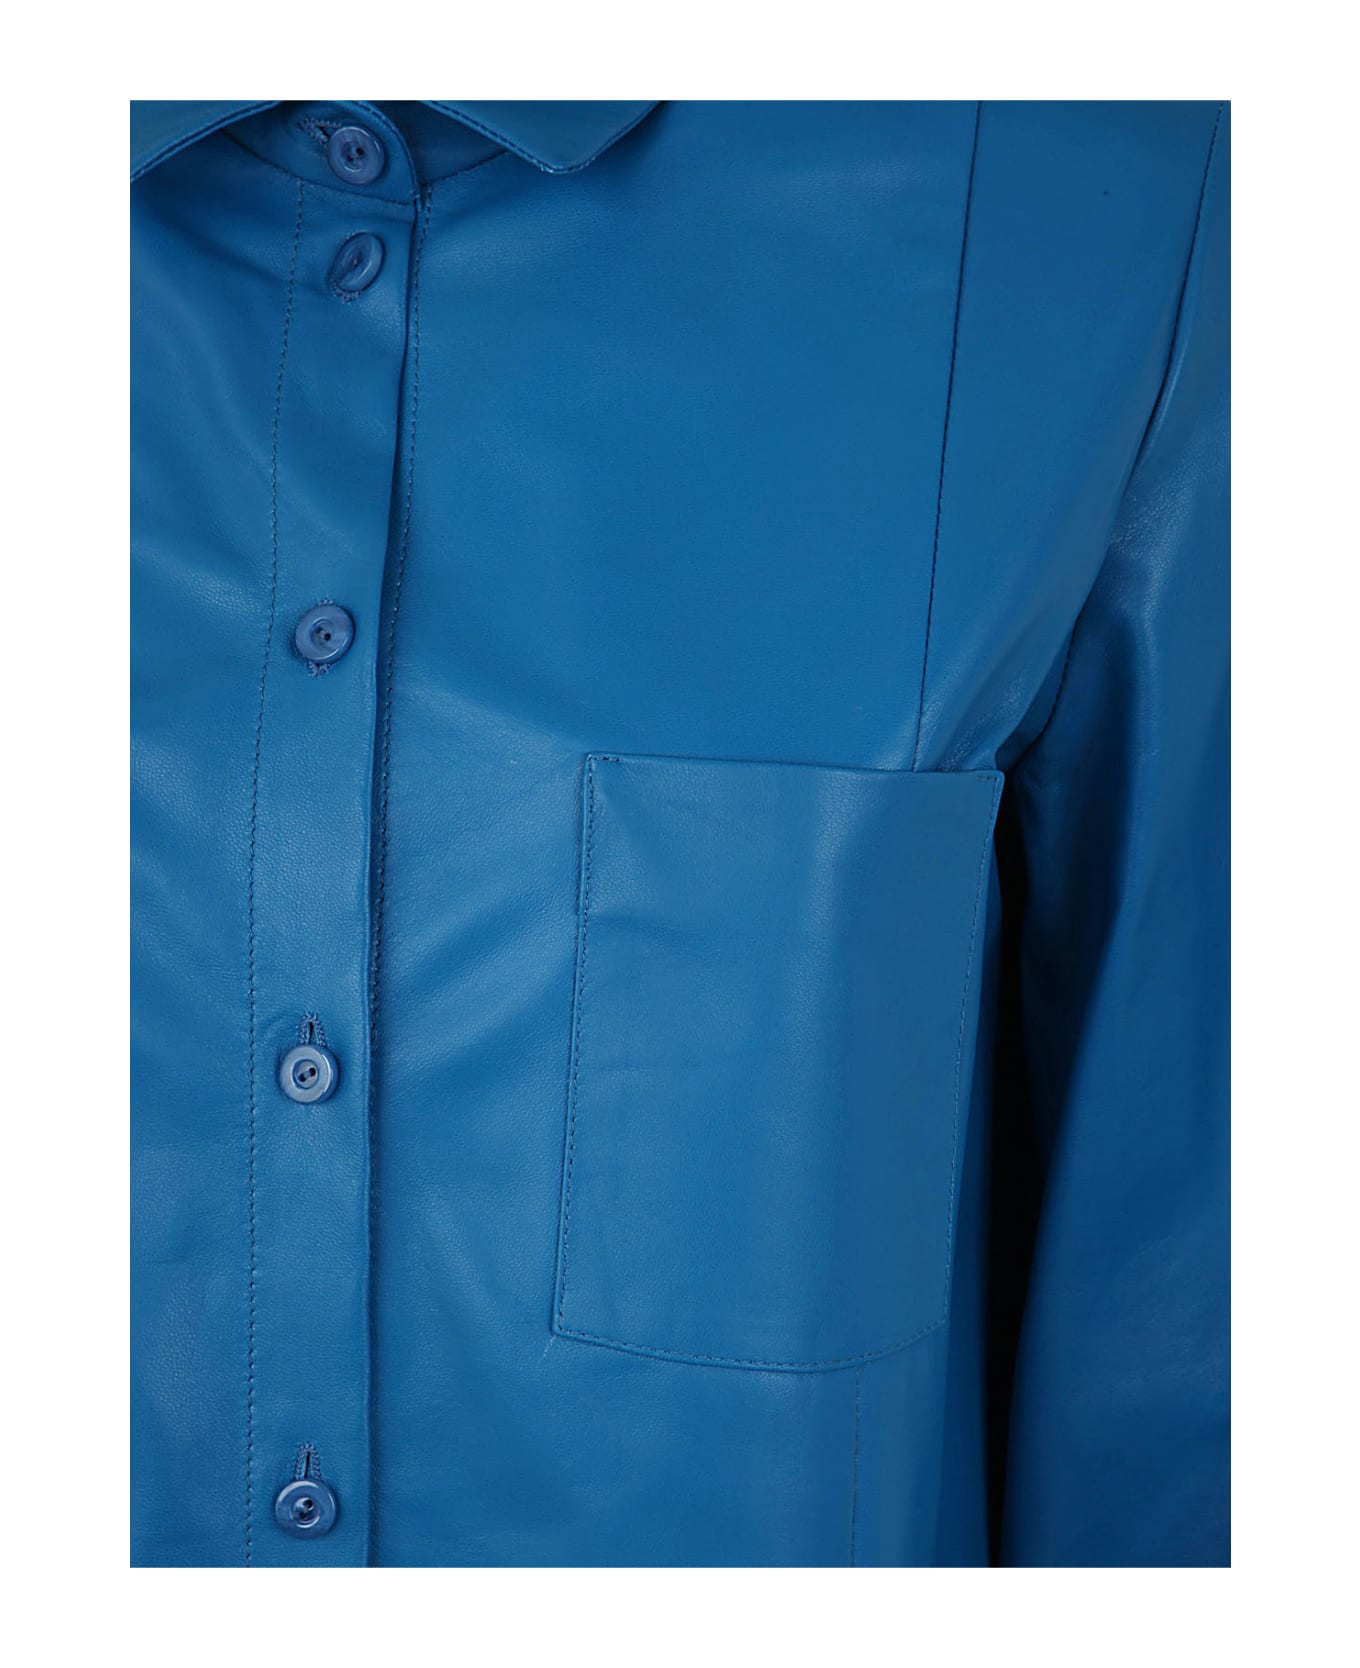 DROMe Leather Shirt - Ultramarine